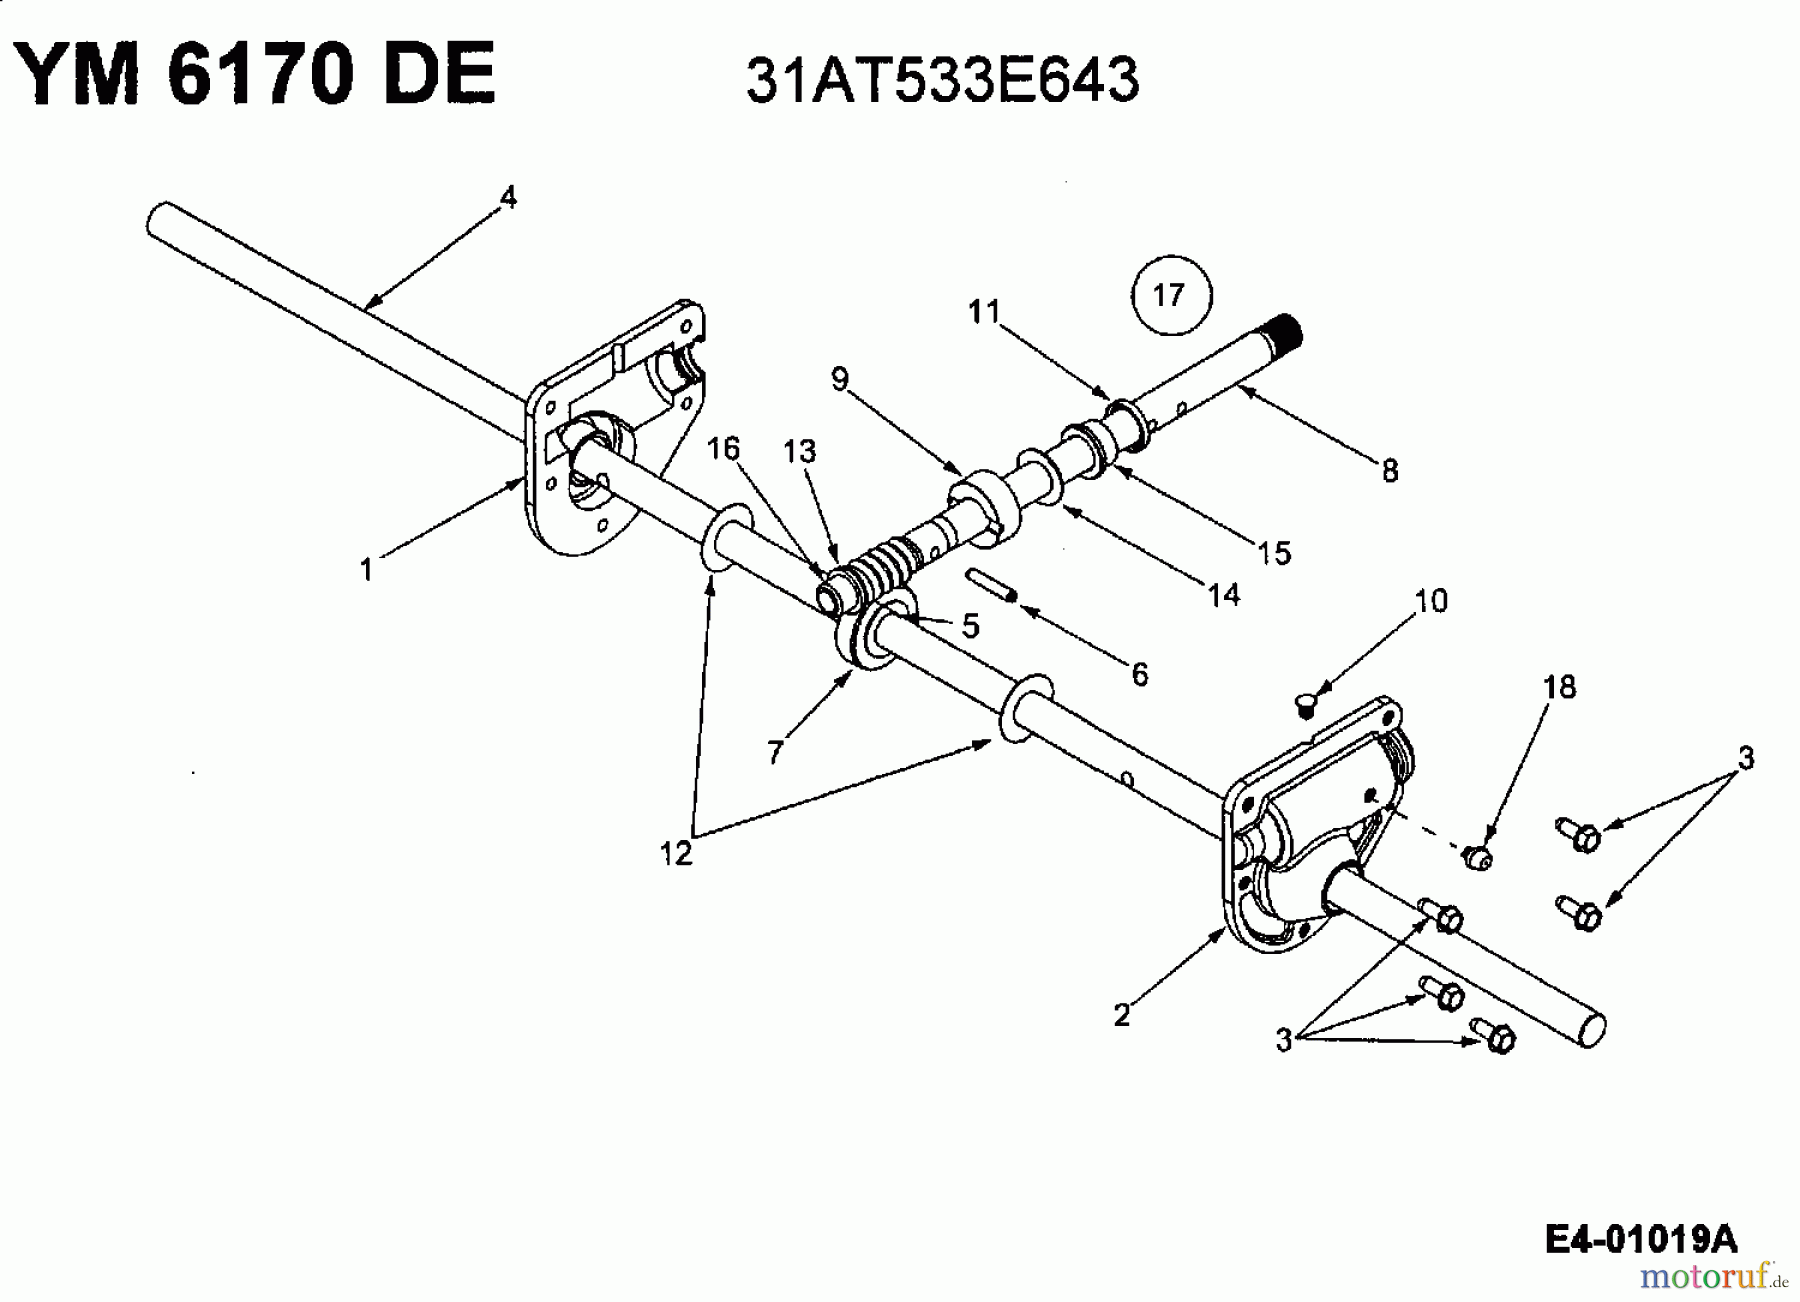  Yard-Man Snow throwers E 533 E 31AE533E643  (2000) Auger gearbox